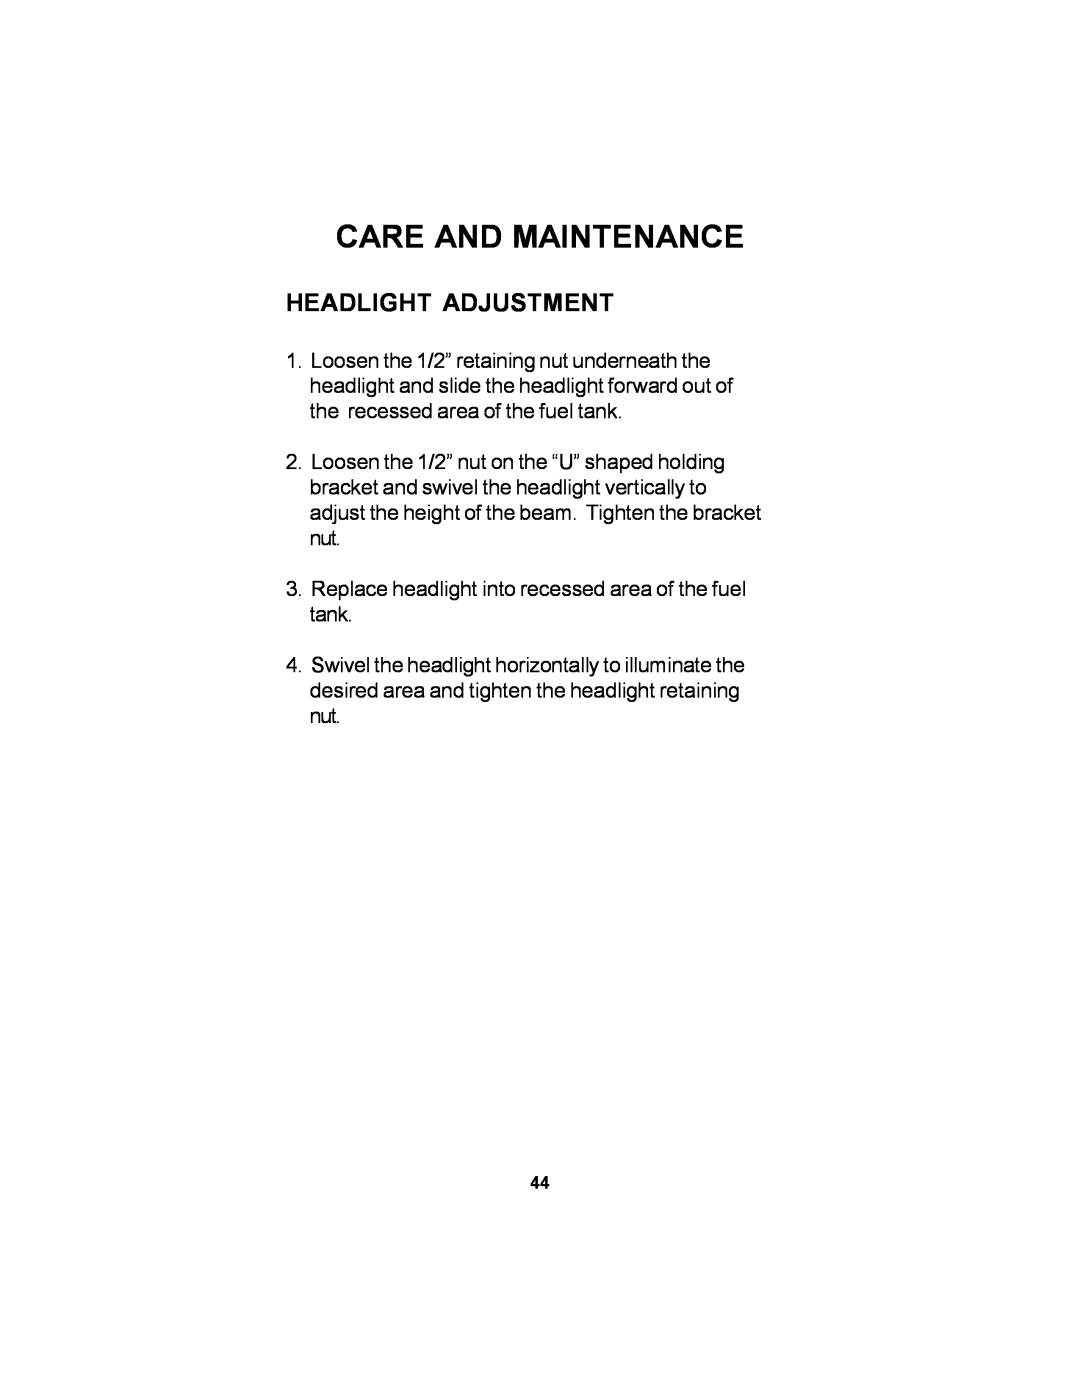 Dixon 12881-106 manual Headlight Adjustment, Care And Maintenance 